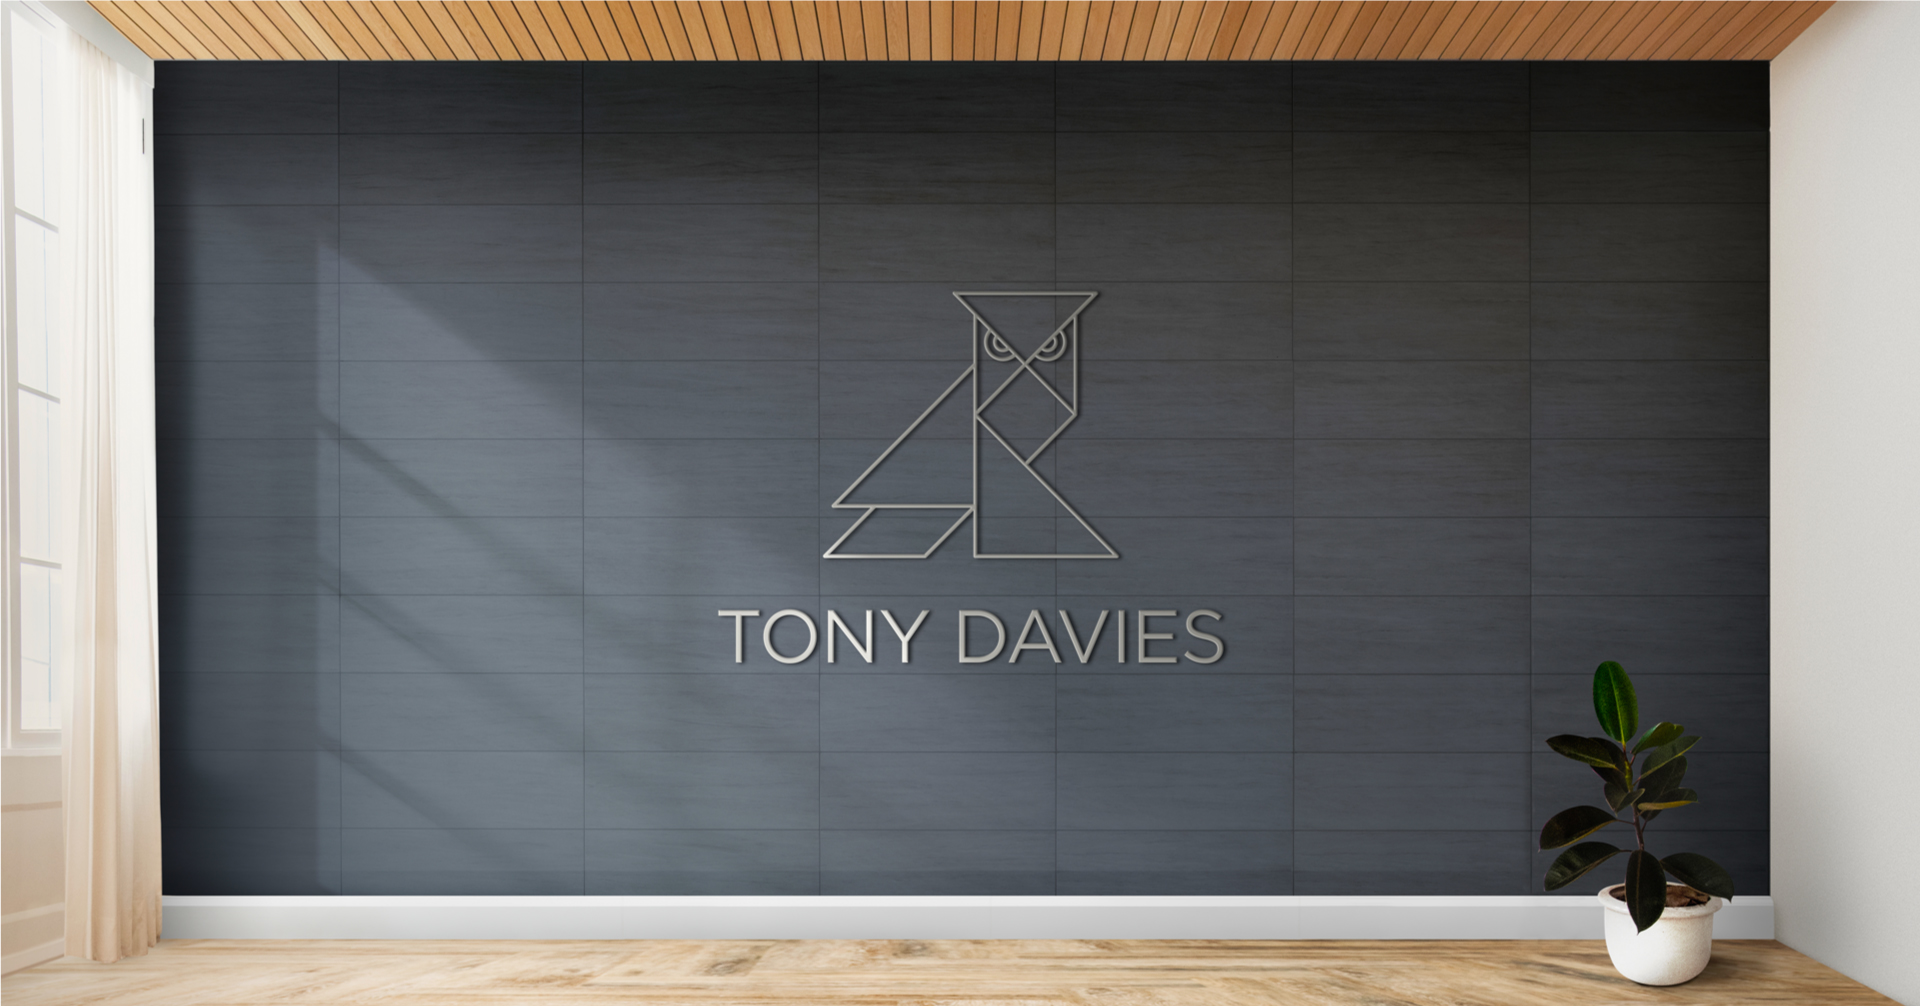 Tony Davies